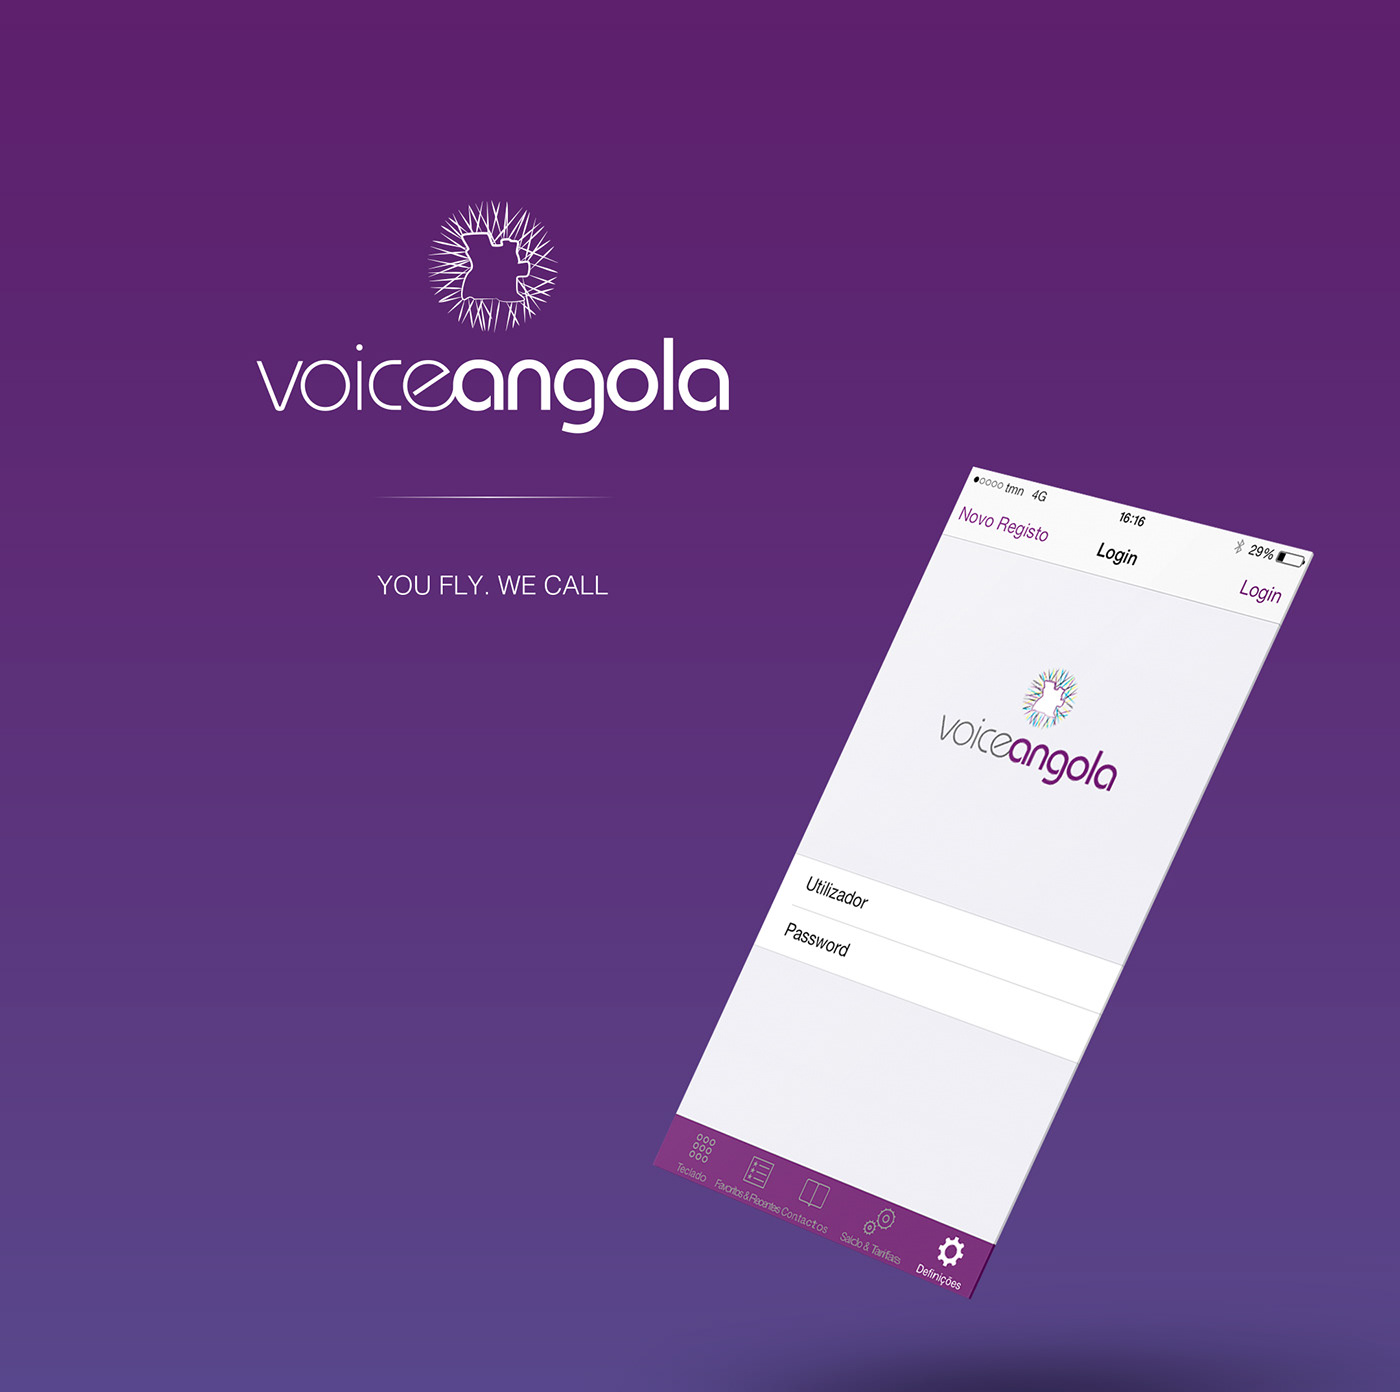 Logo Design copy logo app Voice Angola logo ios VoIP Travel Flights Icon